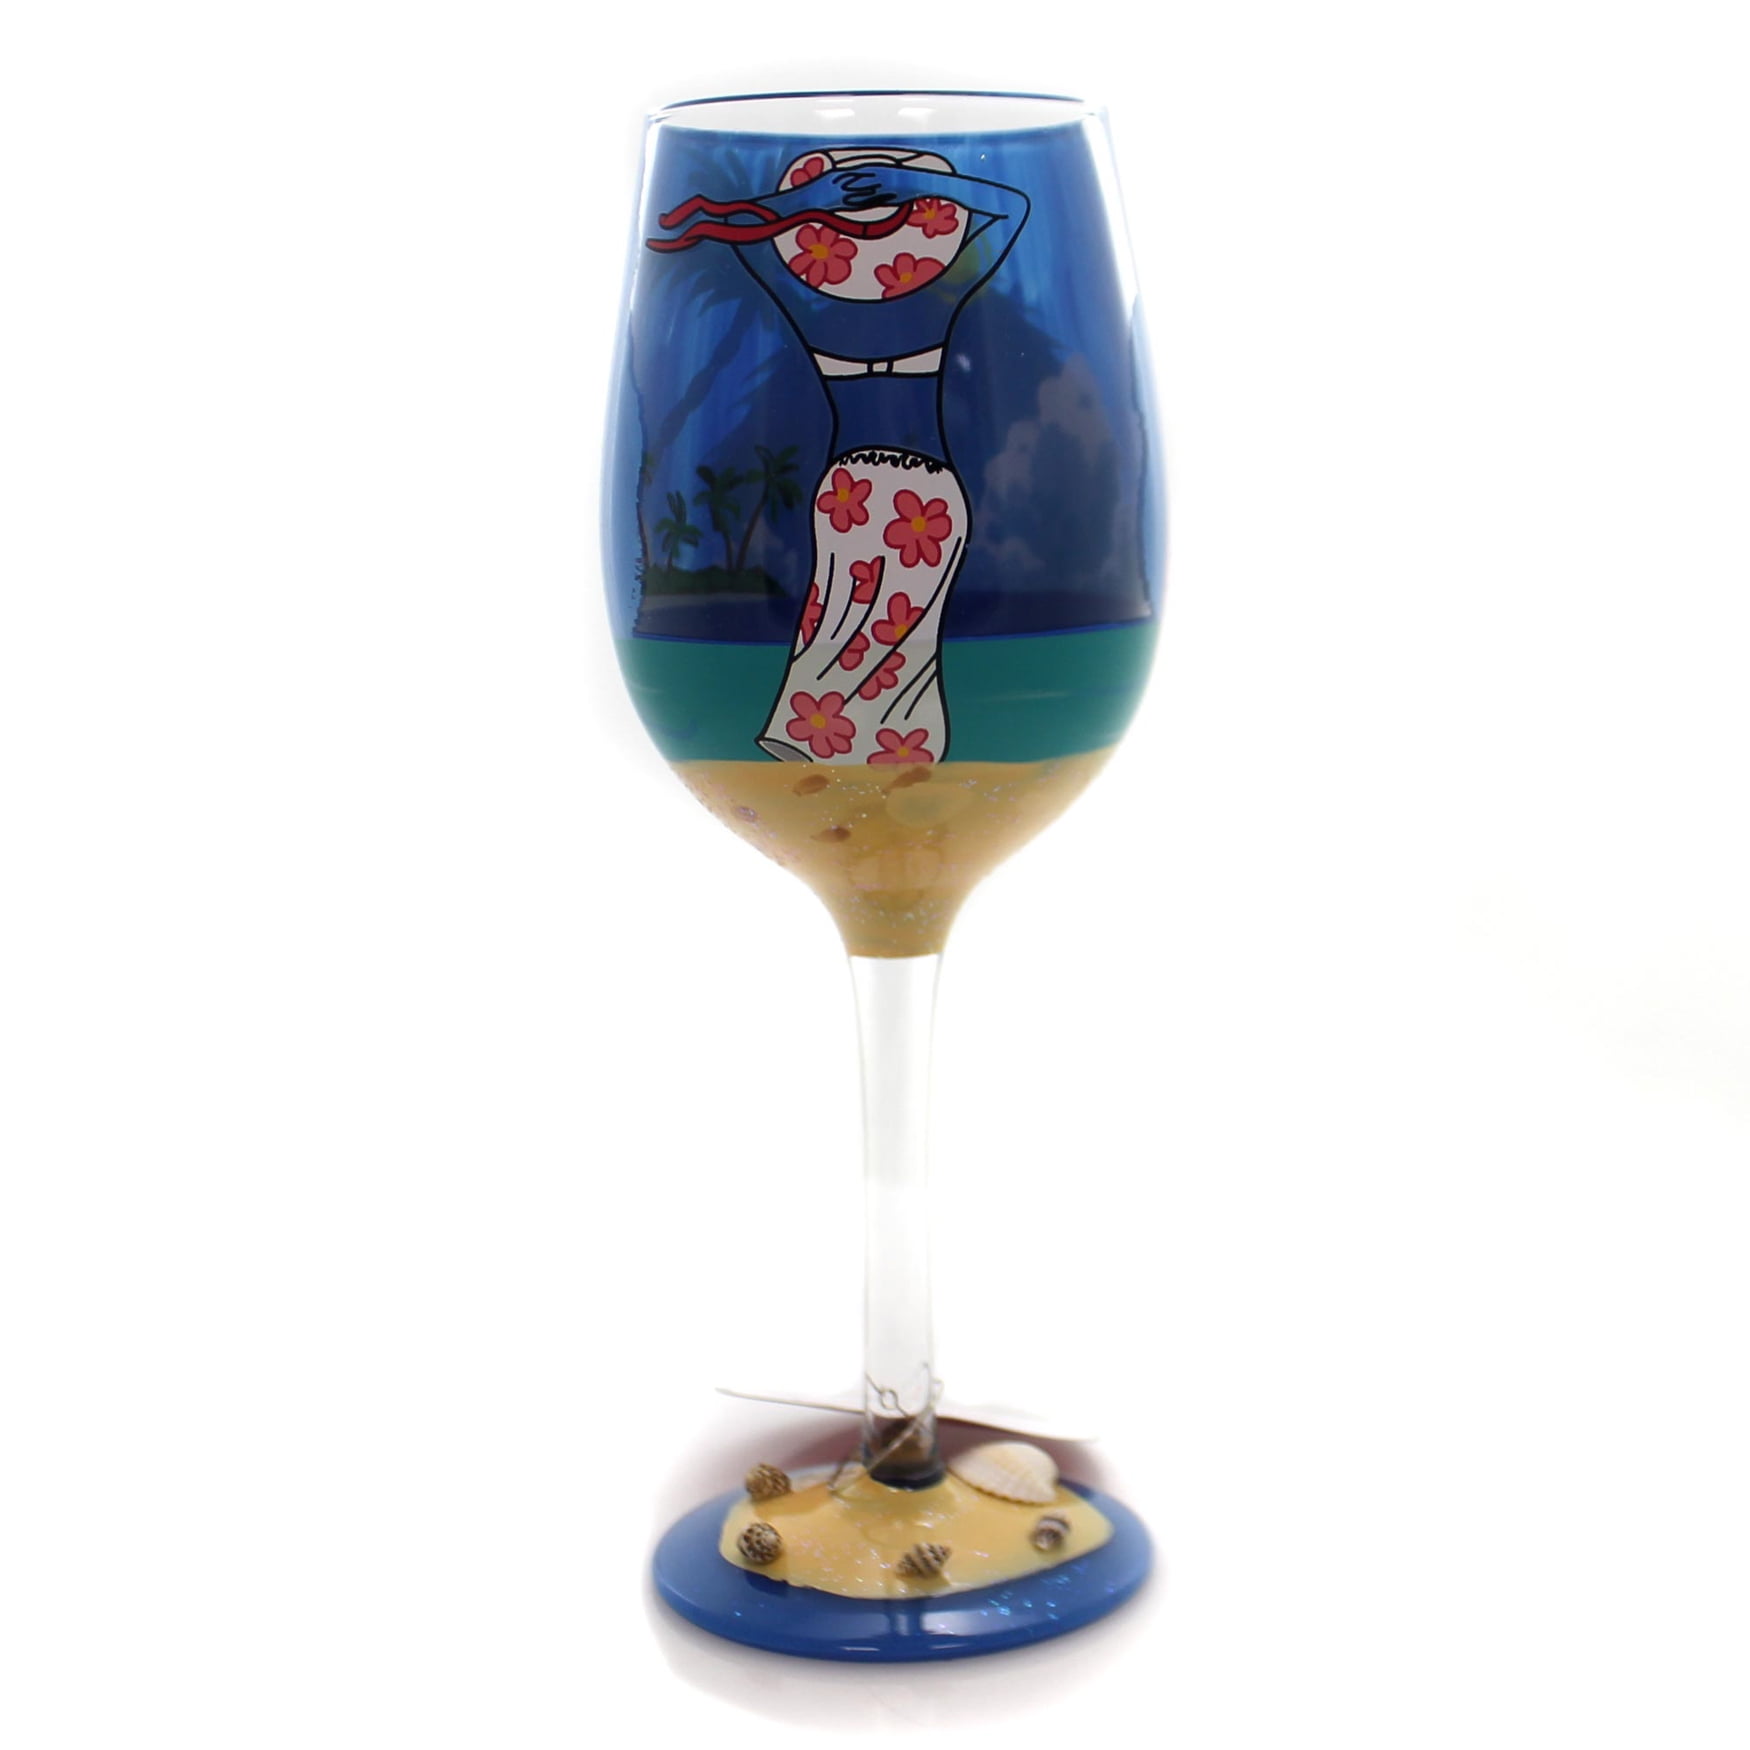 Enesco Designs by Lolita 6001311 Beach Life Wine Glass 15 oz